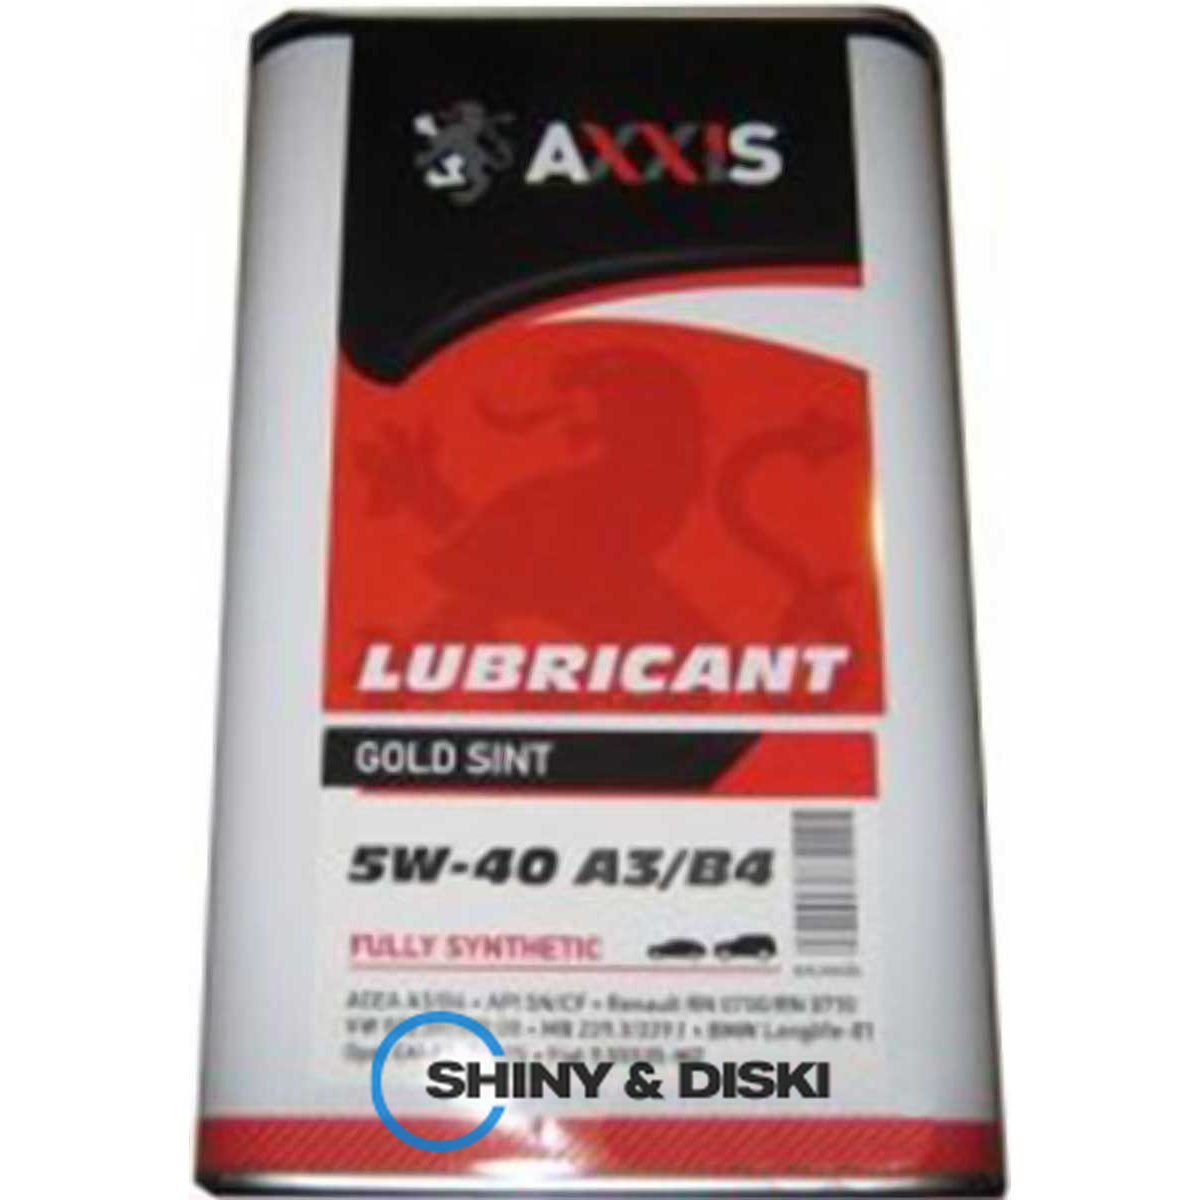 axxis gold sint 5w-40 a3/b4 (1л)